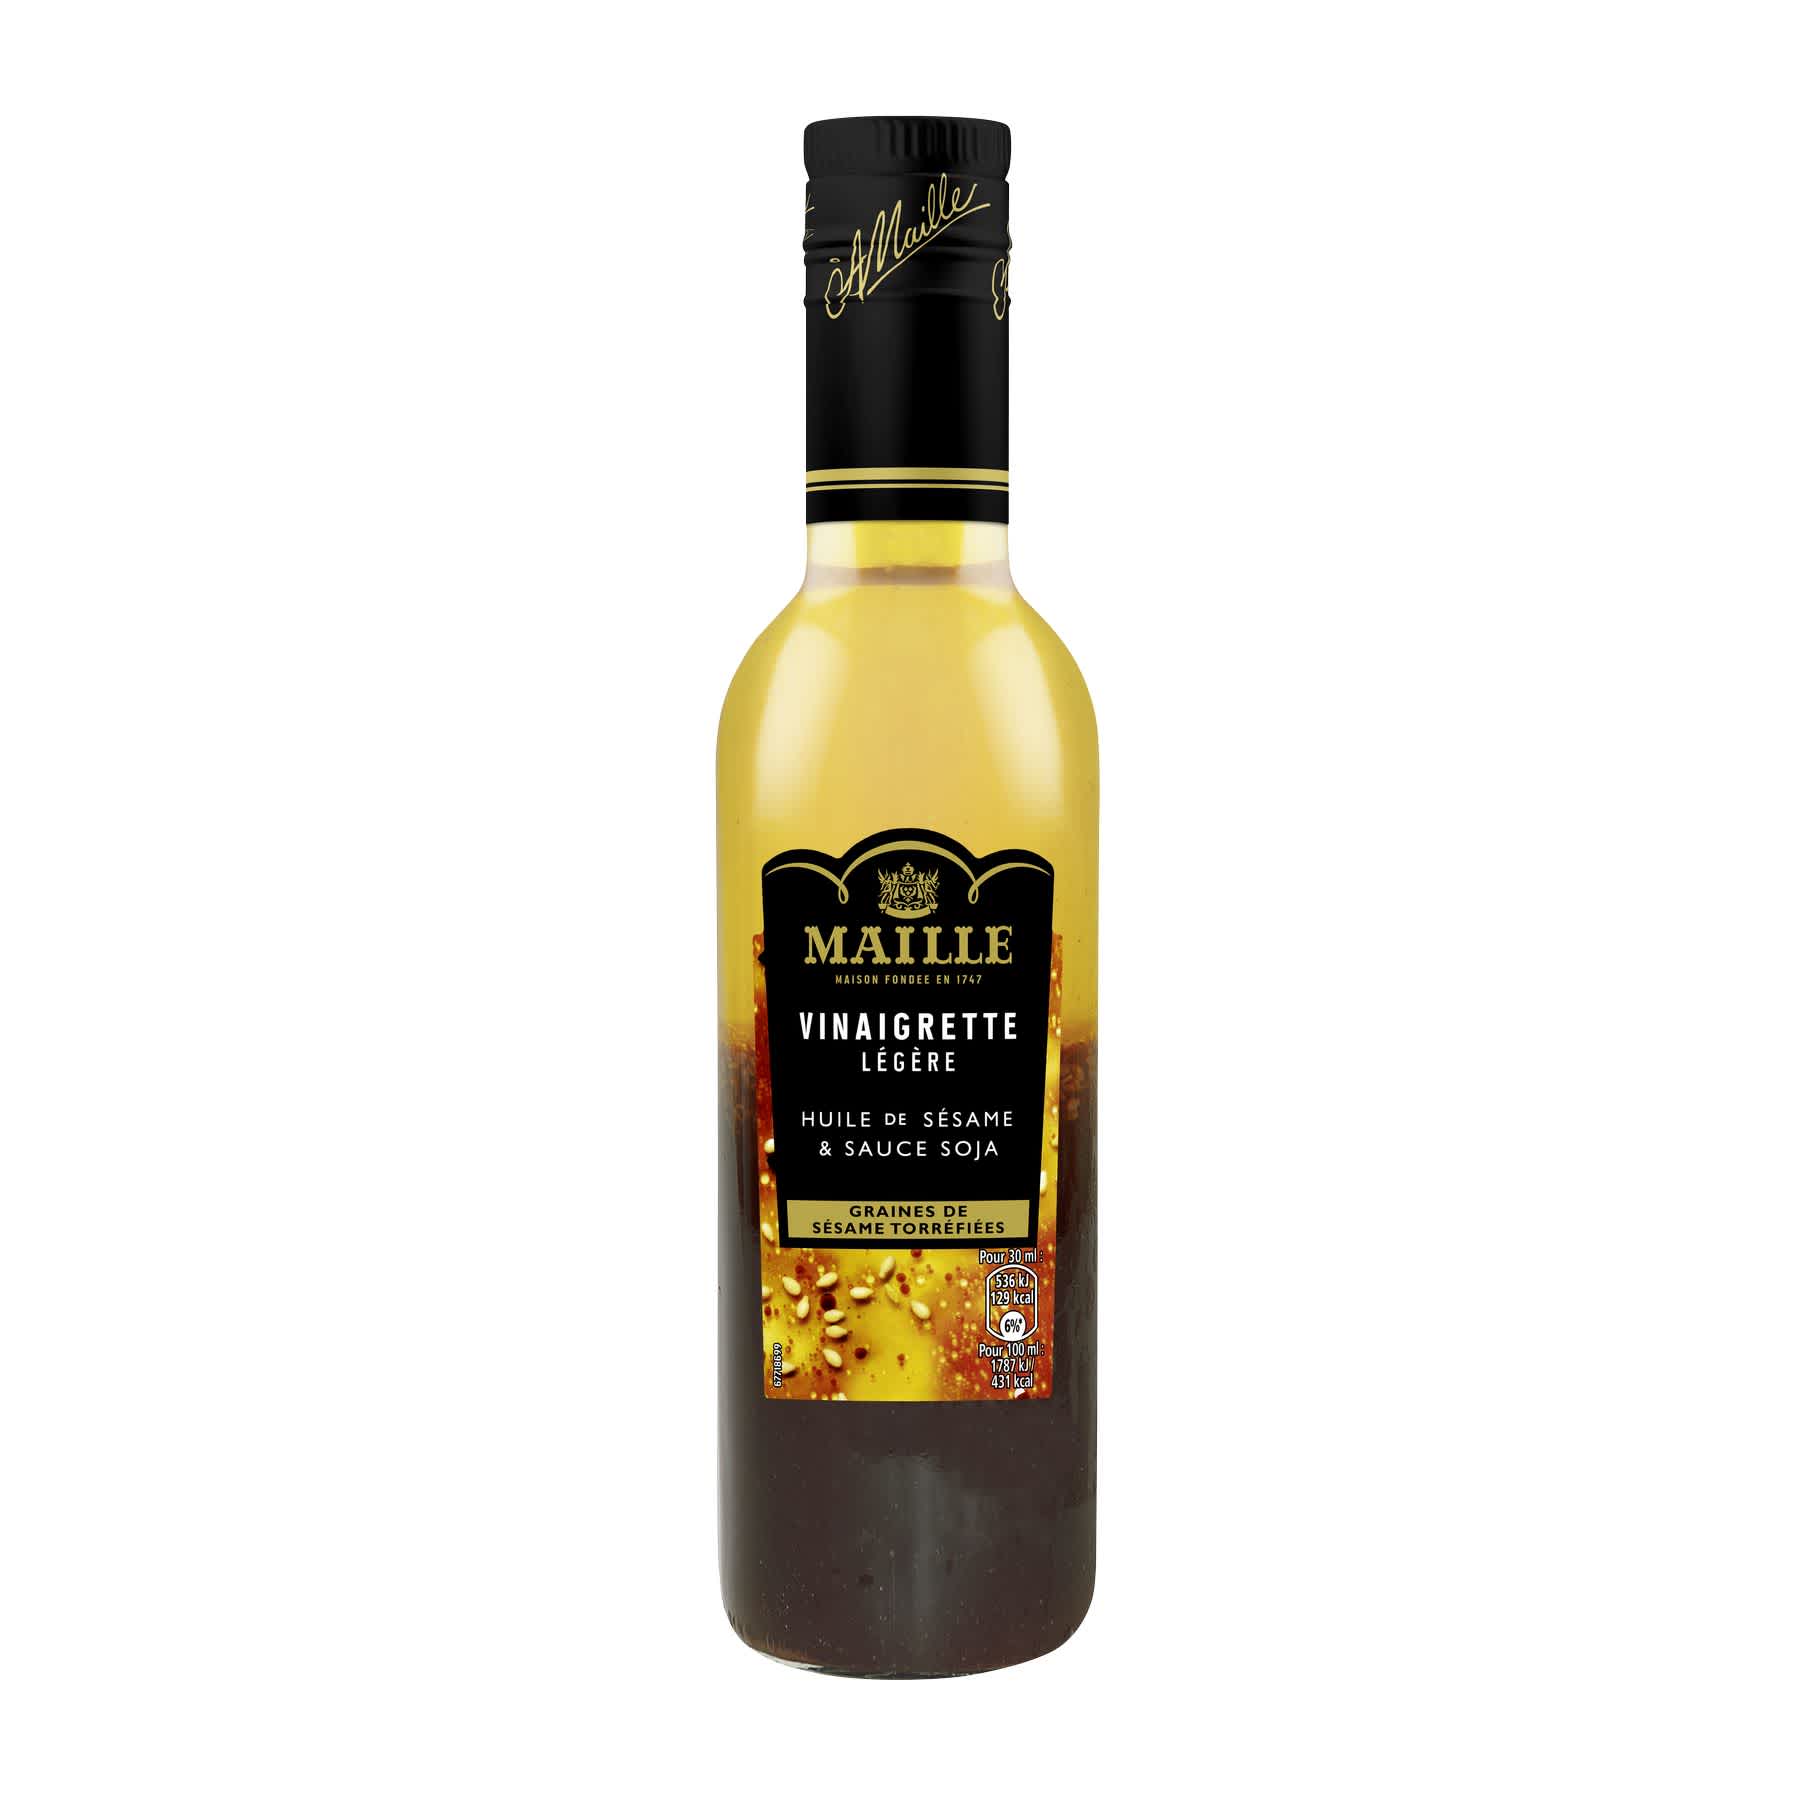 Maille - Vinaigrette huile de sesame & sauce soja graines de sesame torrefiees, 360 ml, overview